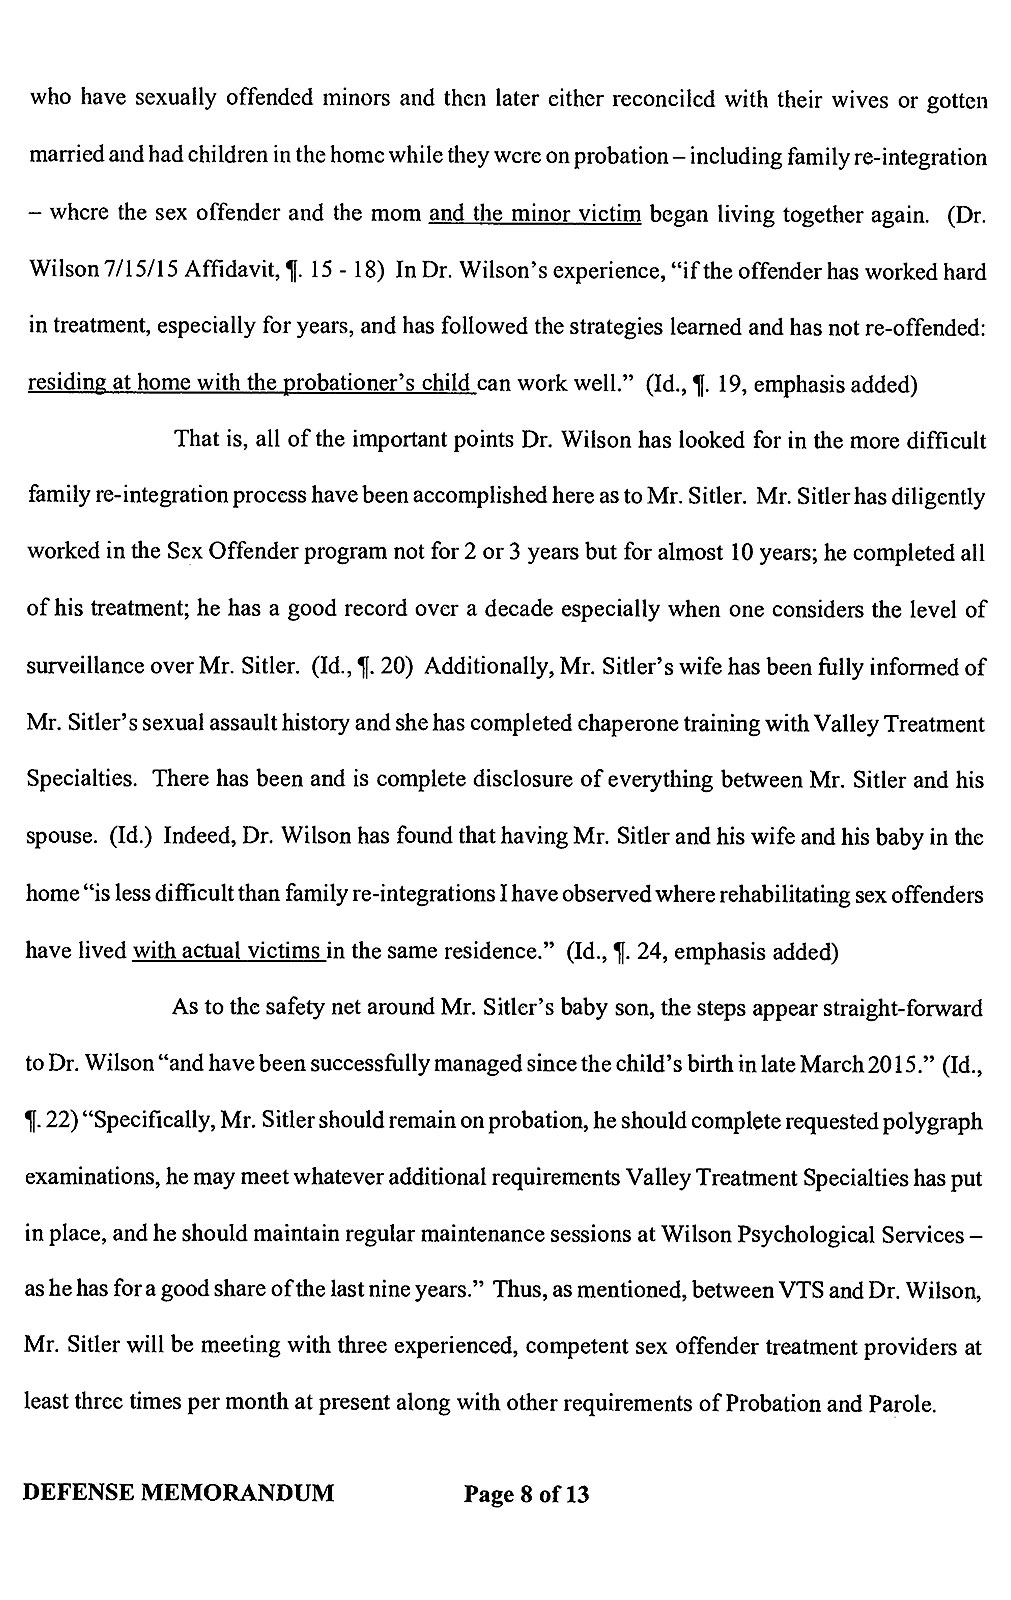 Steven Sitler Defense Memorandum, page 8